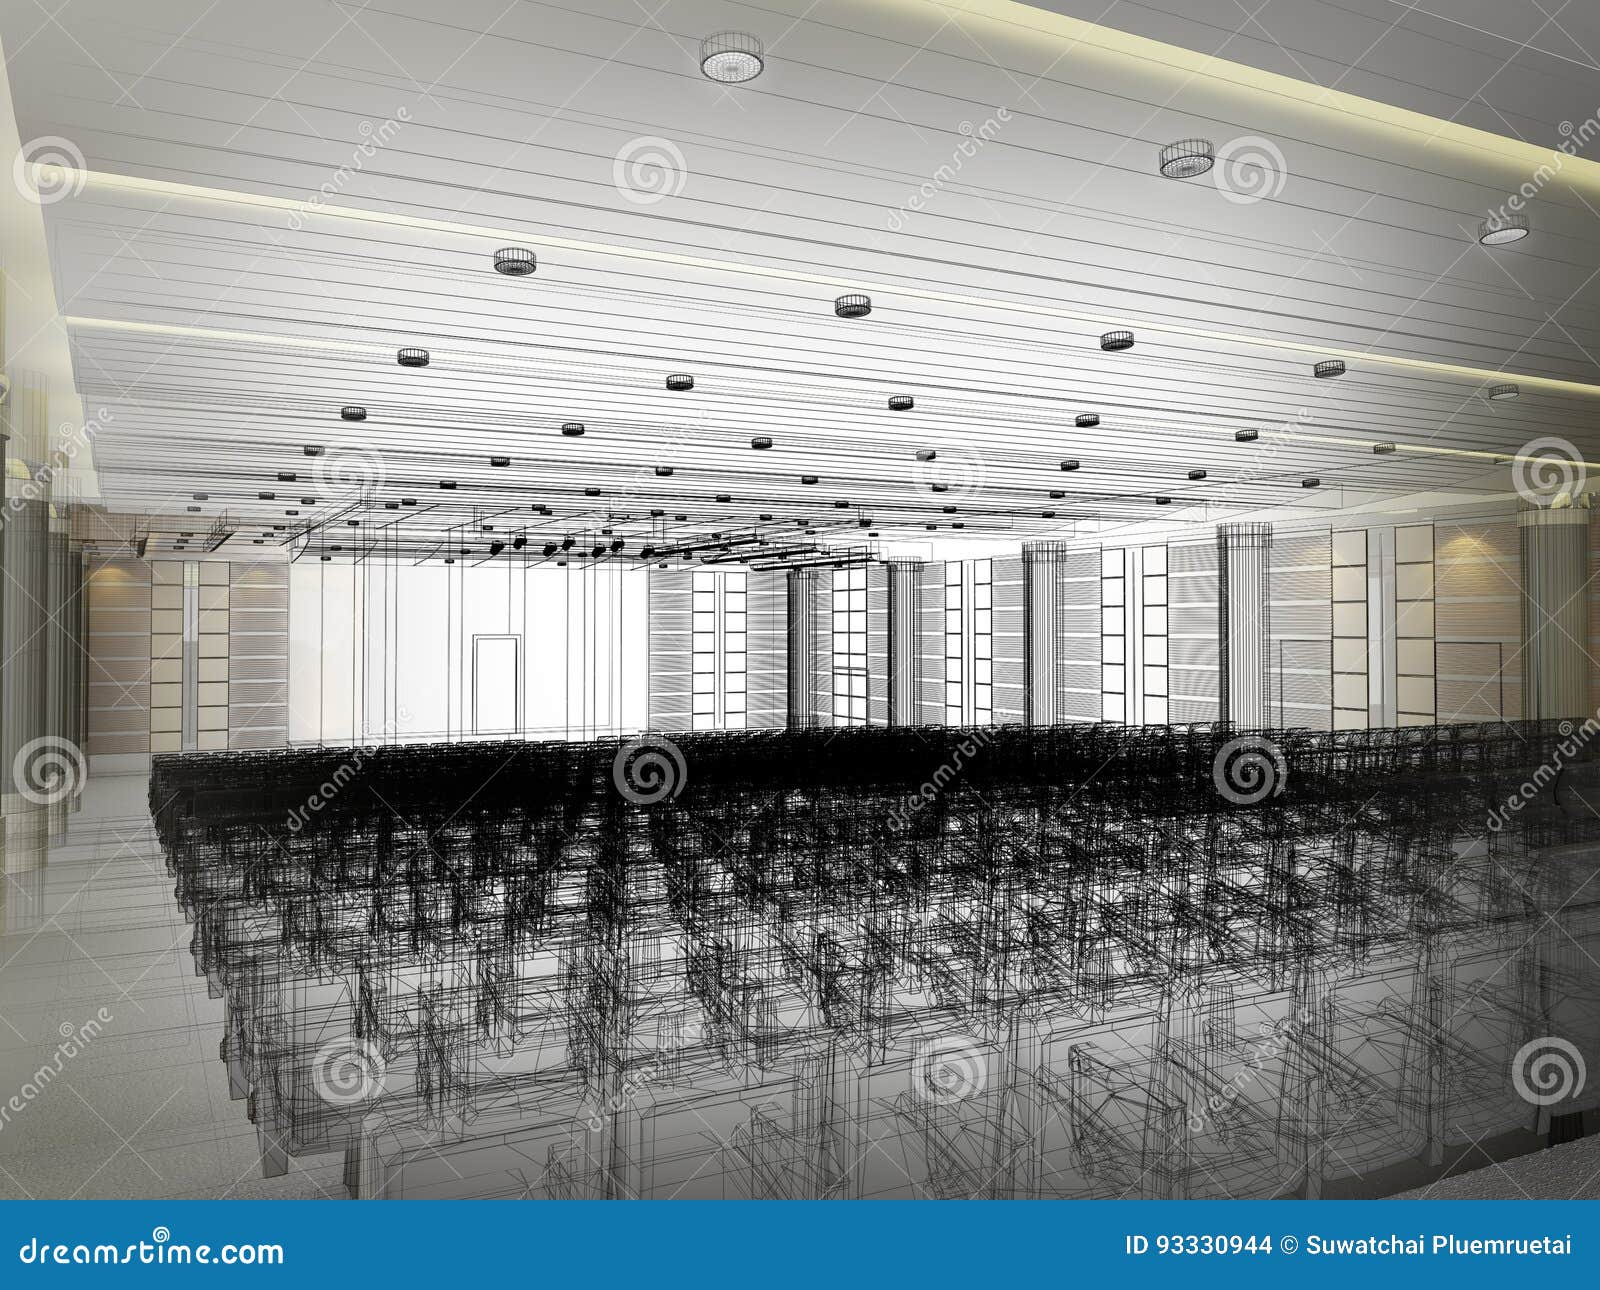 Concert hall interiors for IQIntel on Behance